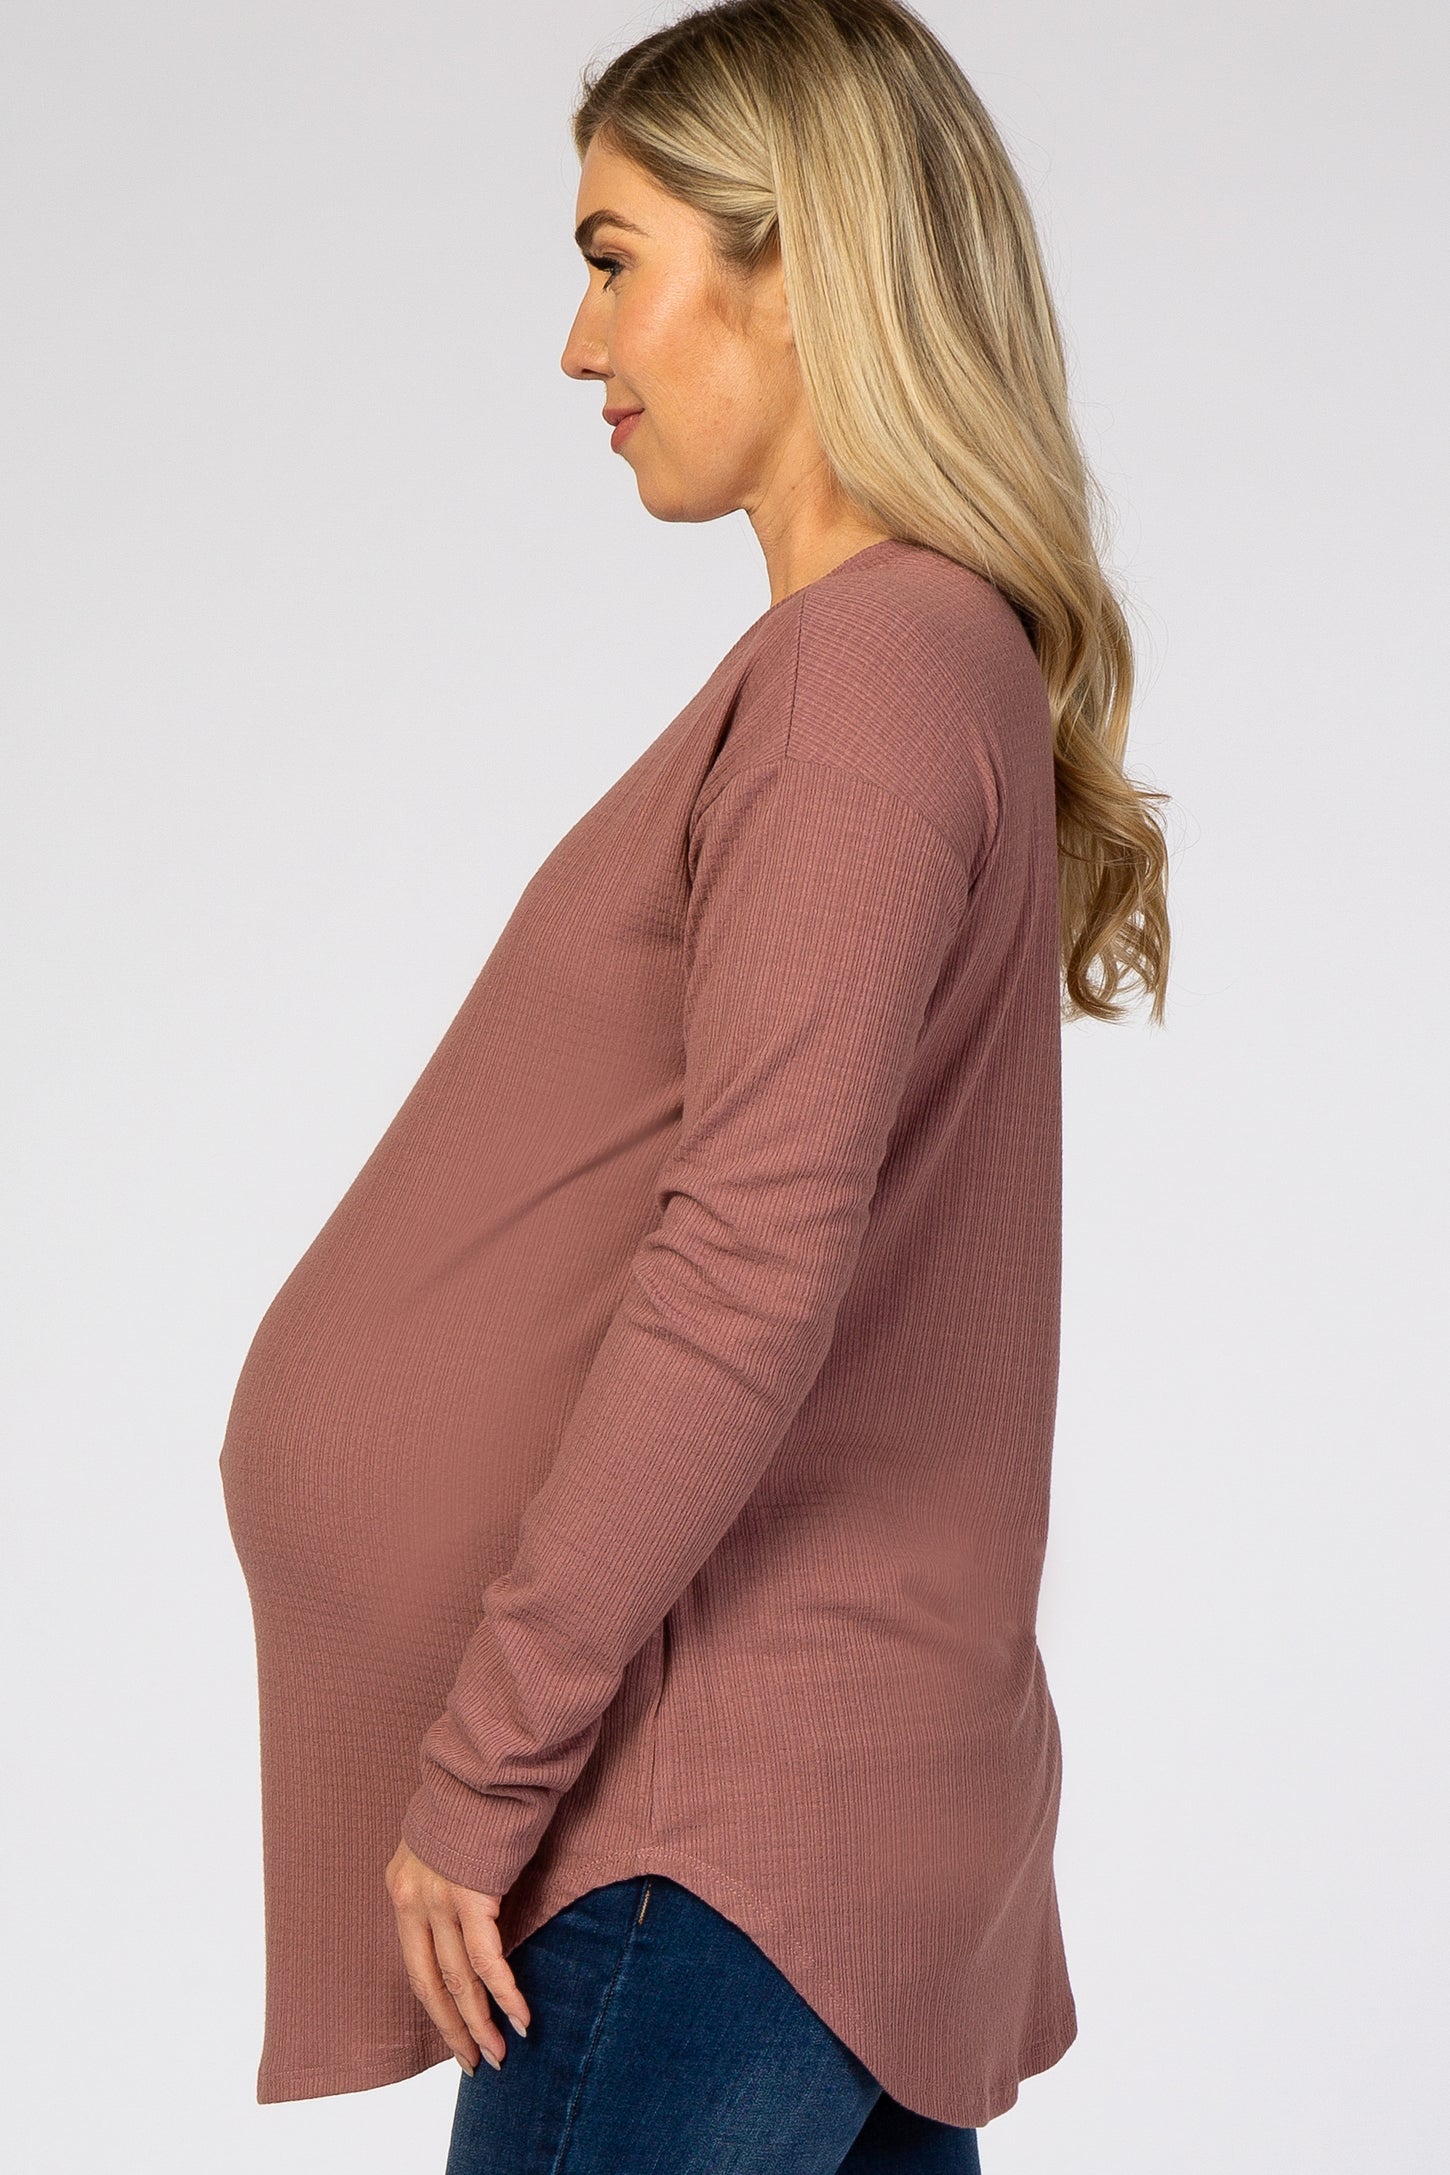 Plum Long Sleeve Ribbed Maternity Top